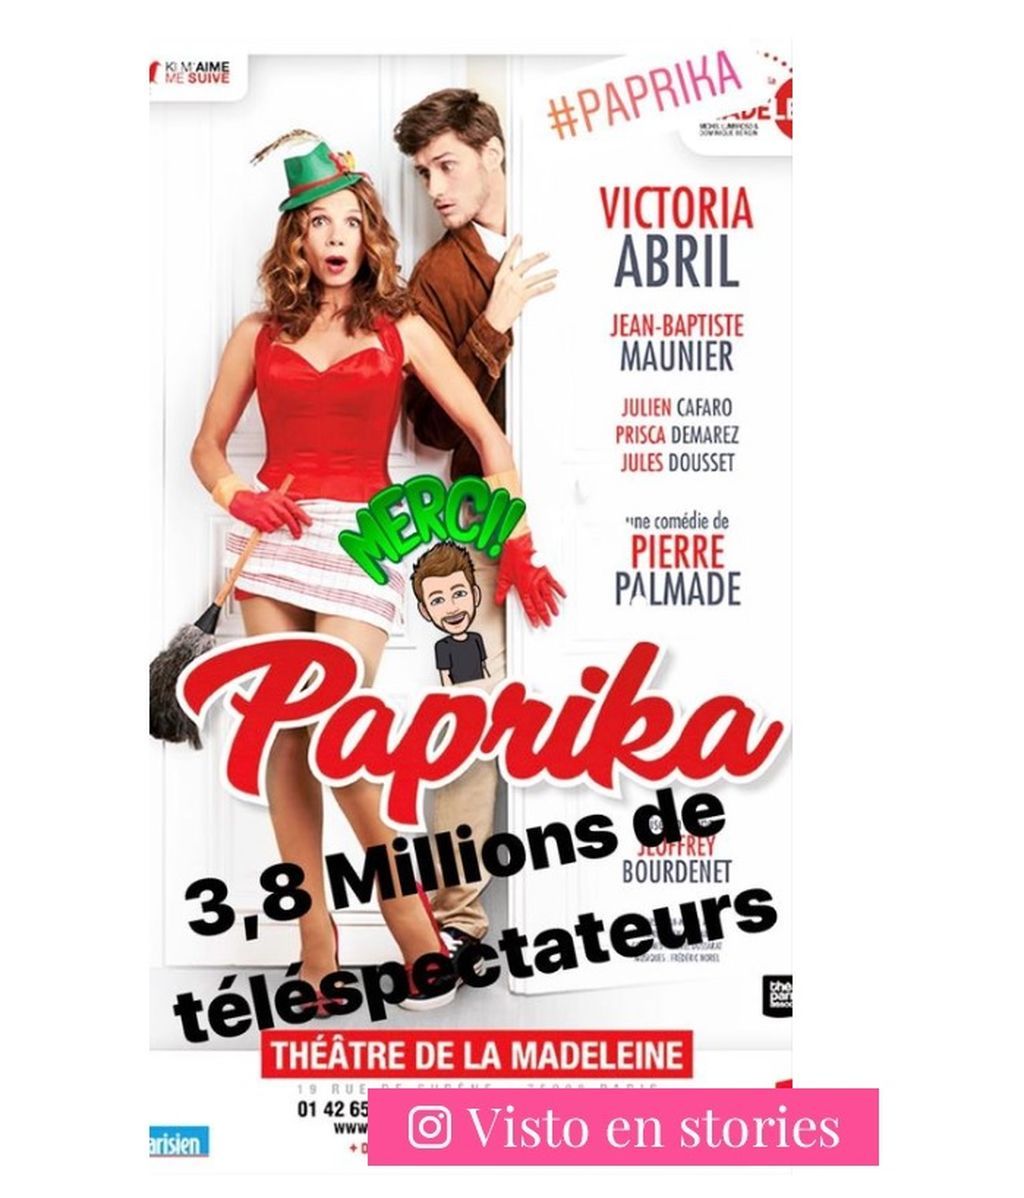 Jean-Baptiste Maunier compartió escenario junto a Victoria Abril en la obra 'Paprika'